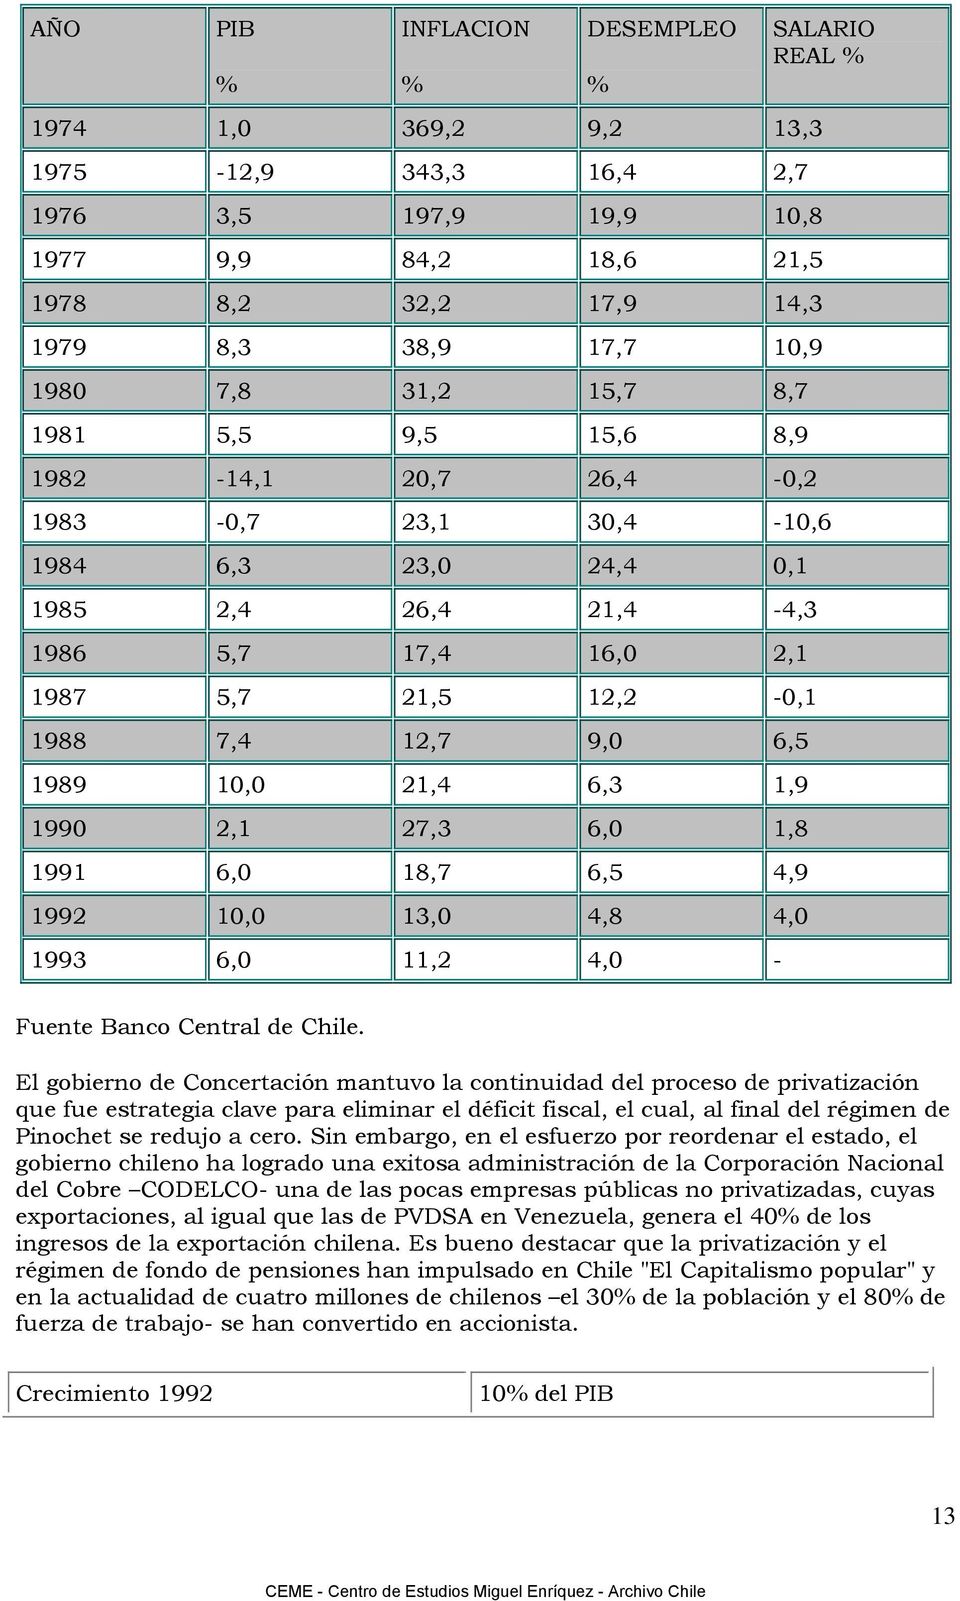 6,5 1989 10,0 21,4 6,3 1,9 1990 2,1 27,3 6,0 1,8 1991 6,0 18,7 6,5 4,9 1992 10,0 13,0 4,8 4,0 1993 6,0 11,2 4,0 - Fuente Banco Central de Chile.